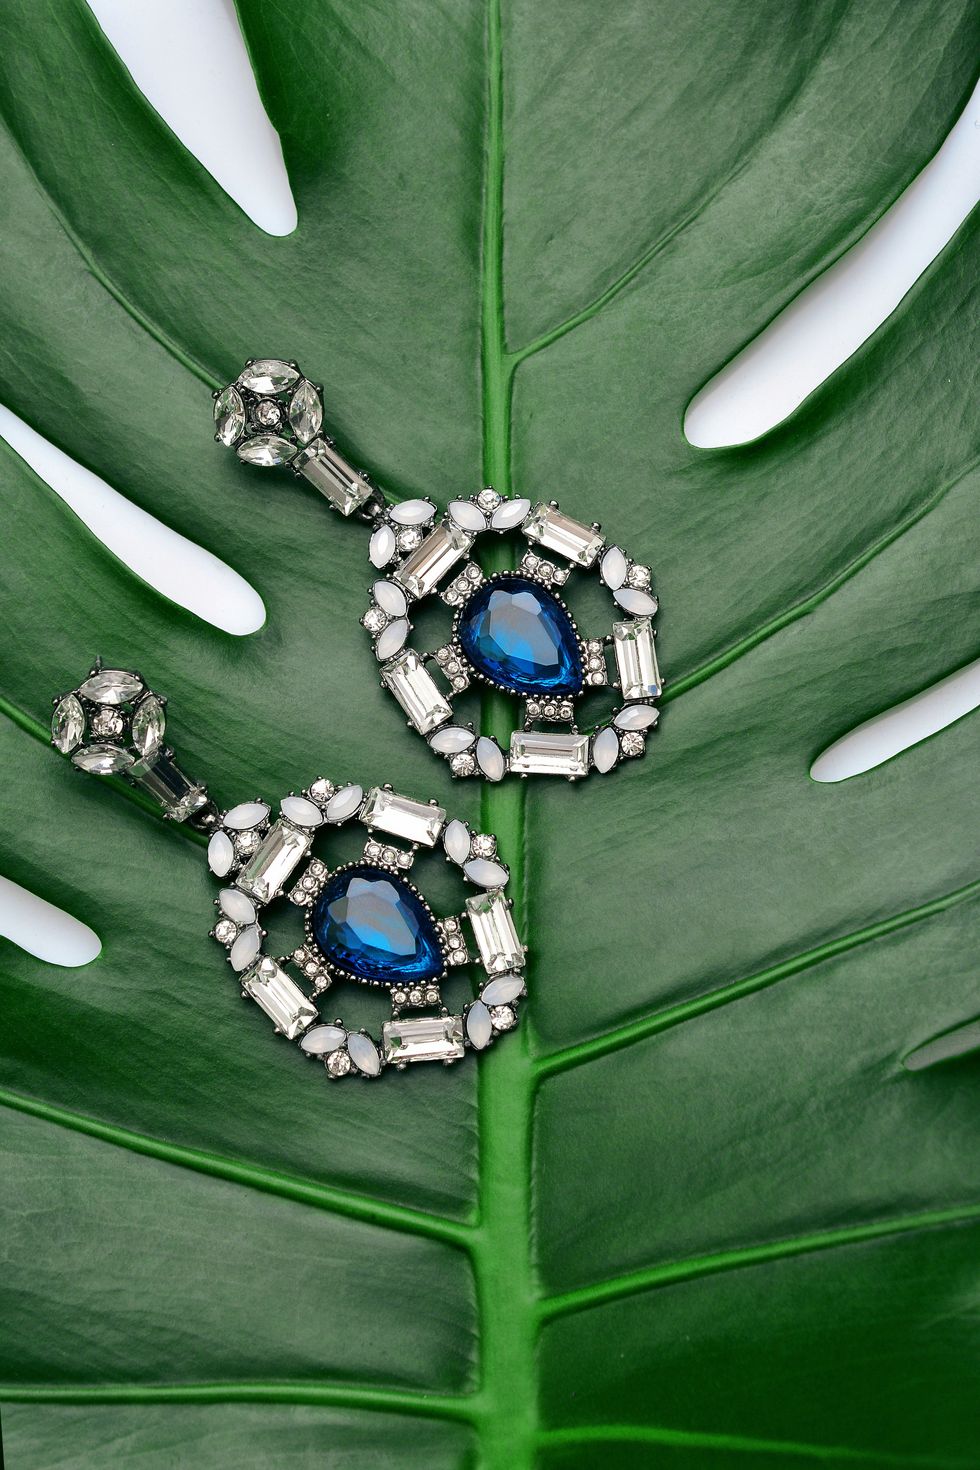 Pair of silver and blue gemstone earrings